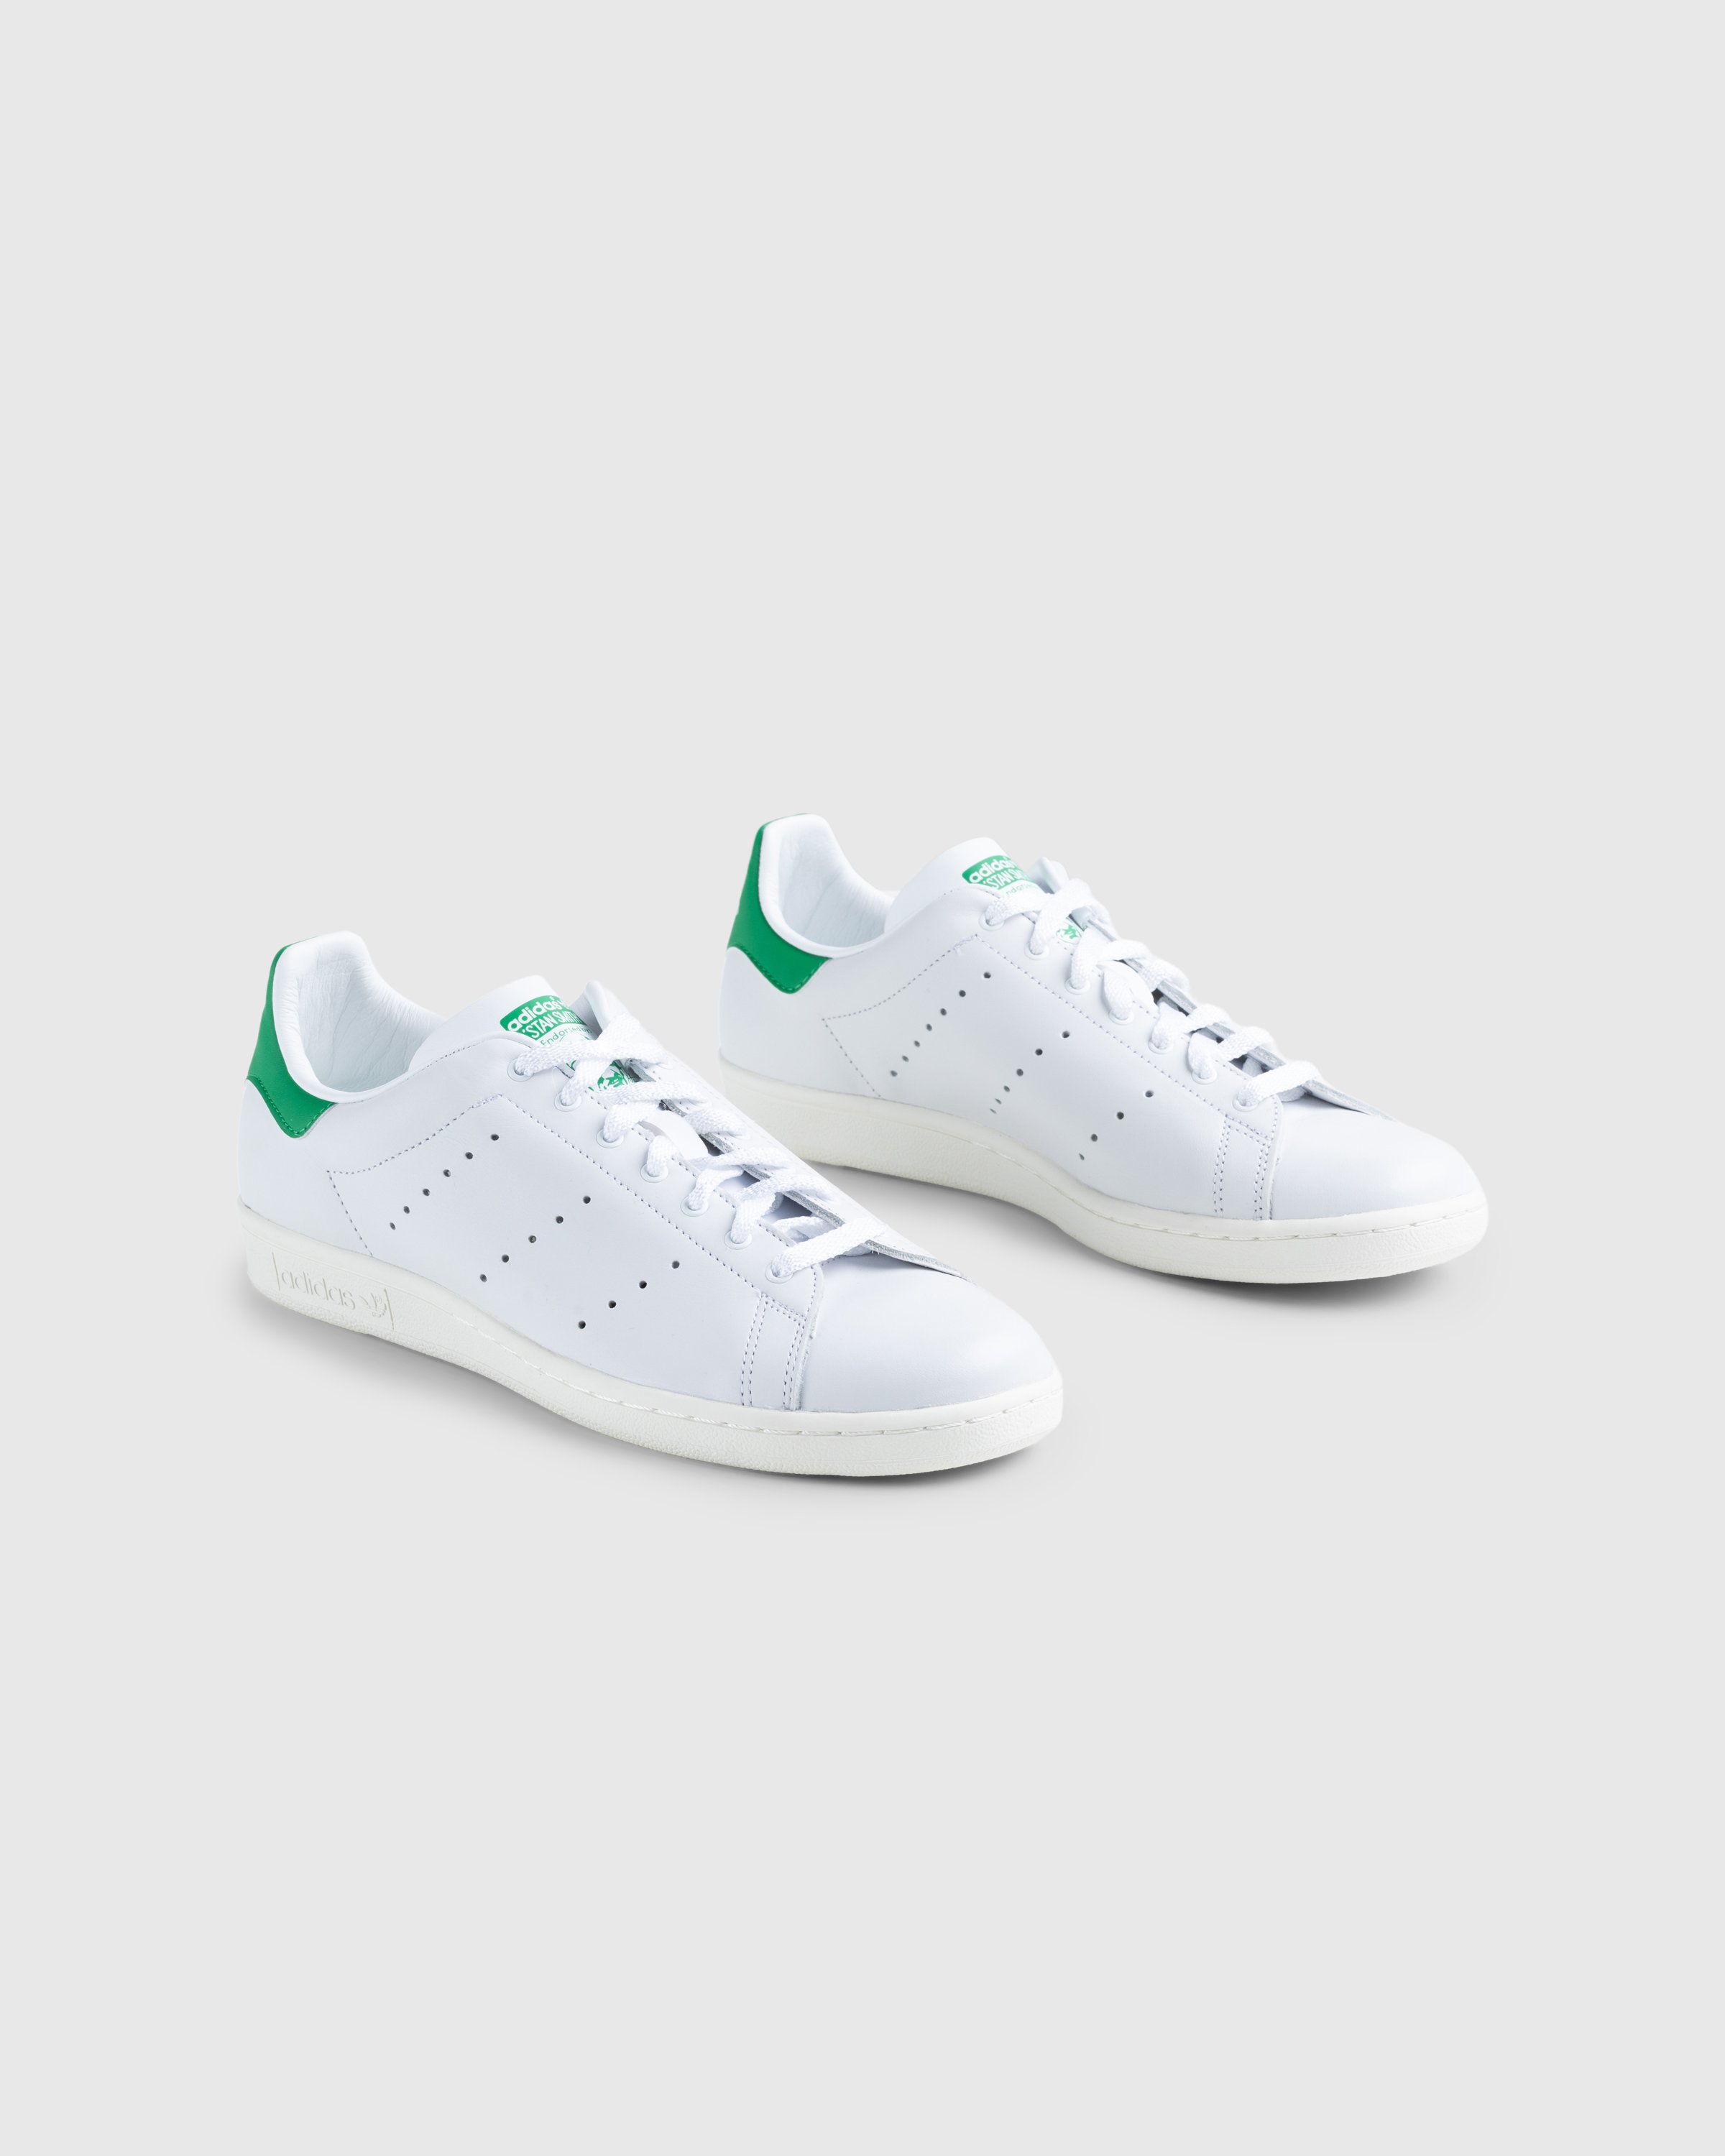 Adidas - Stan Smith 80s - Footwear - White - Image 3